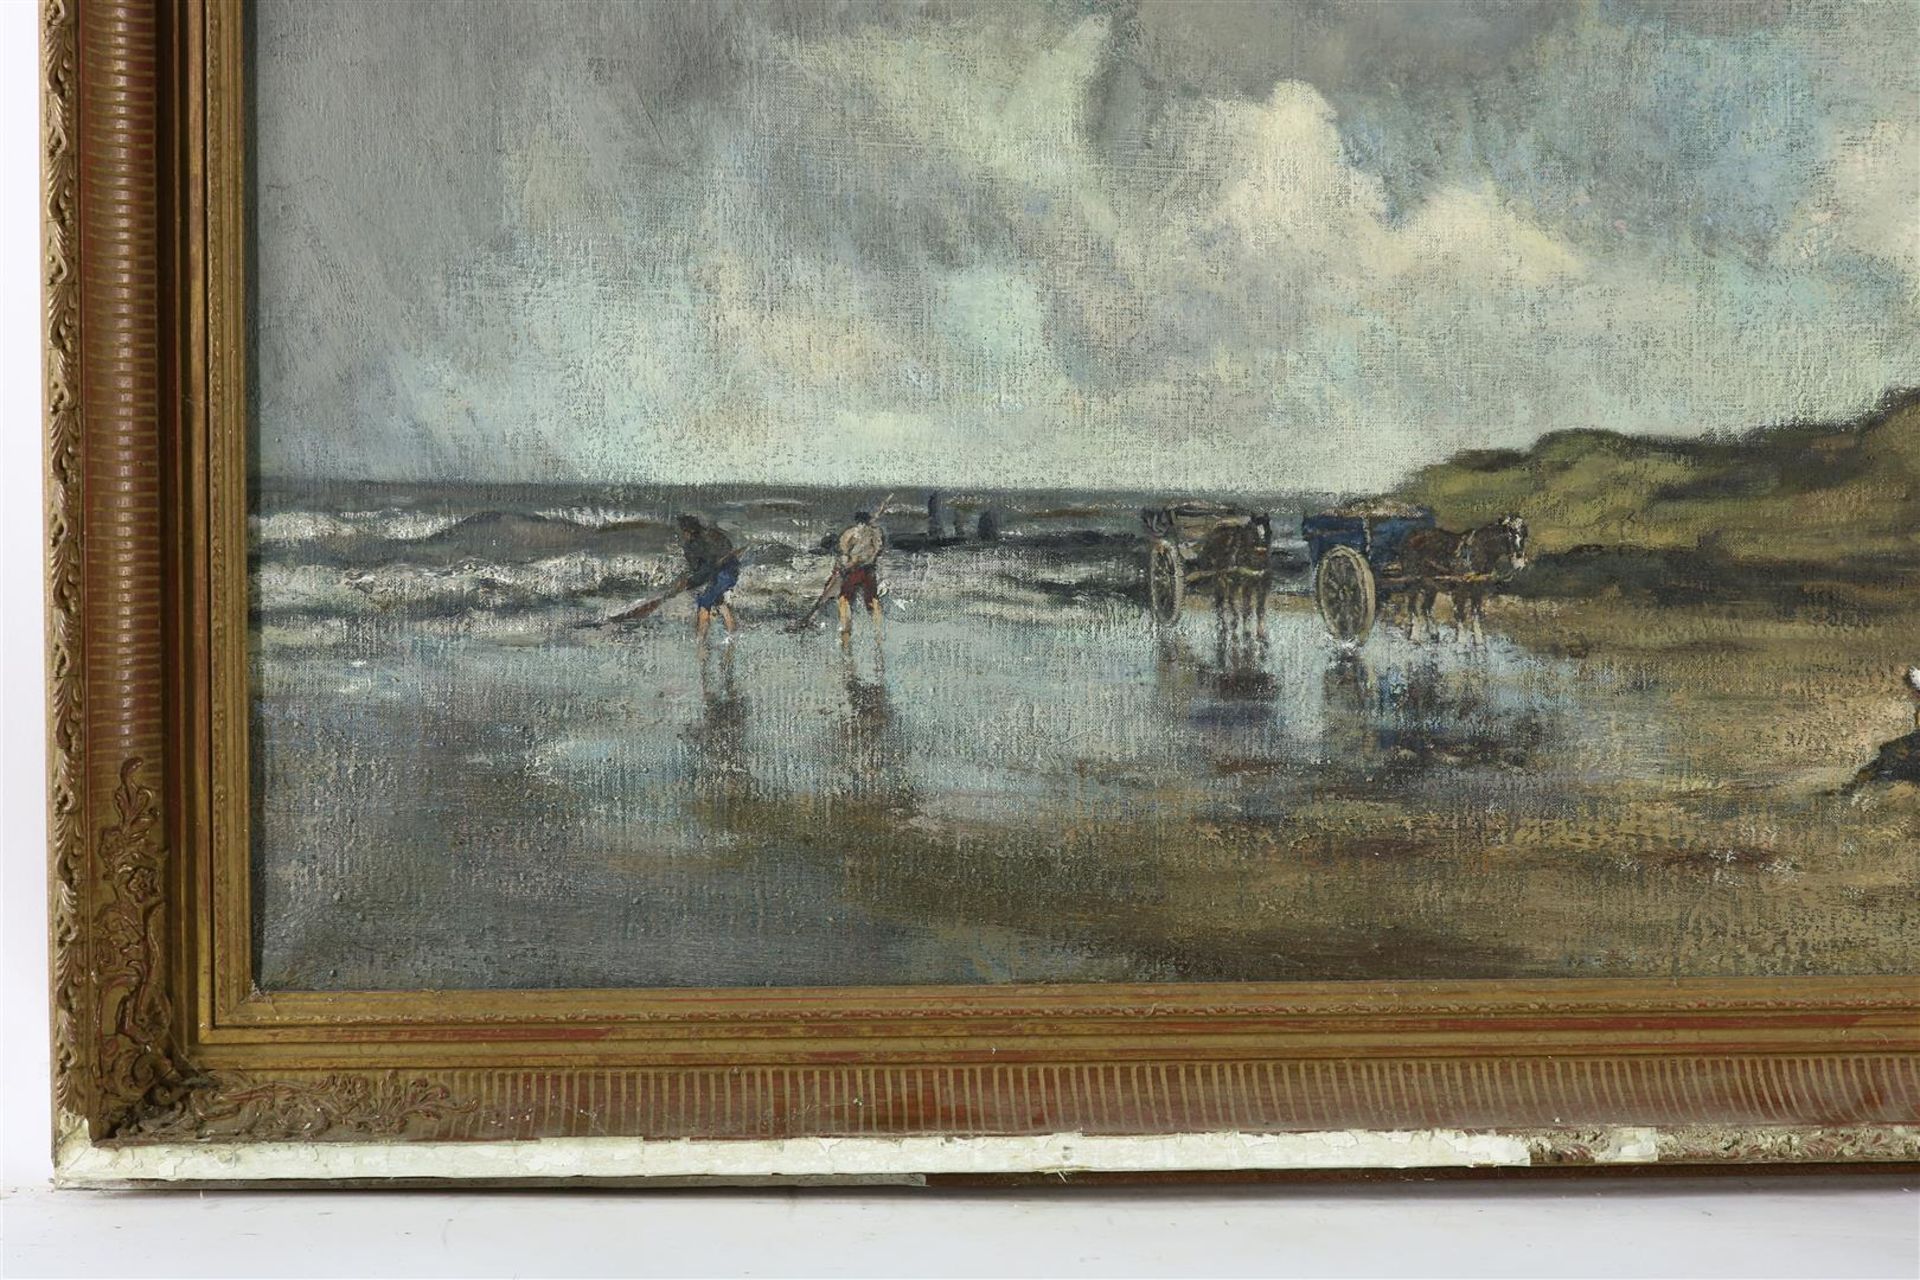 Klaas Poel de Beach view, signed bottom right, canvas, 100 x 130 cm. - Image 4 of 5